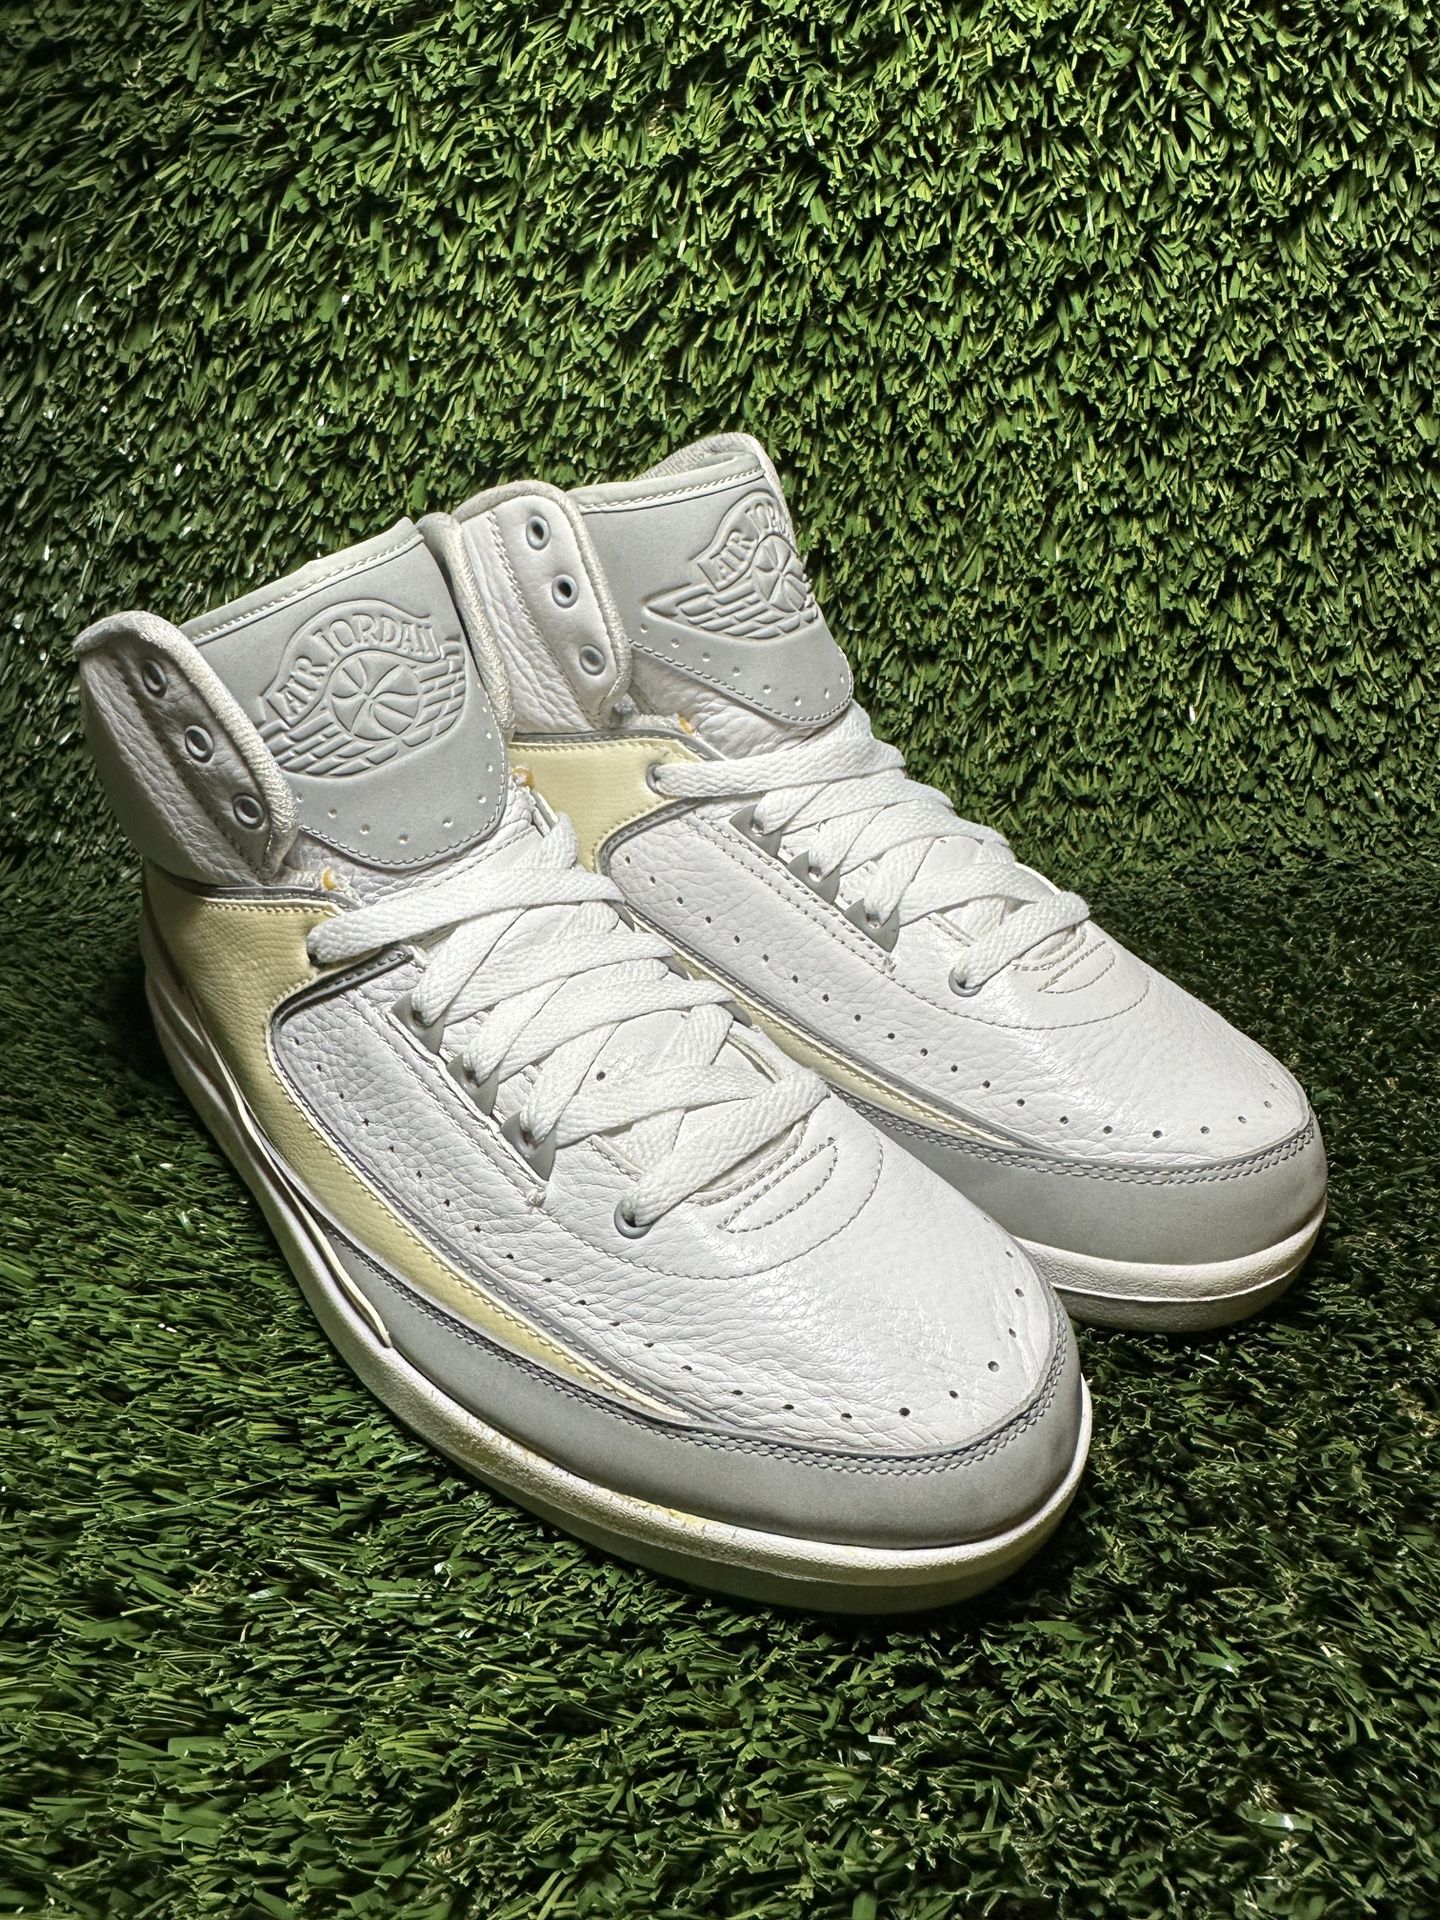 Nike Air Jordan 2 Retro White Cement Grey Sail 2009 DR8884-100 Men size 9.5